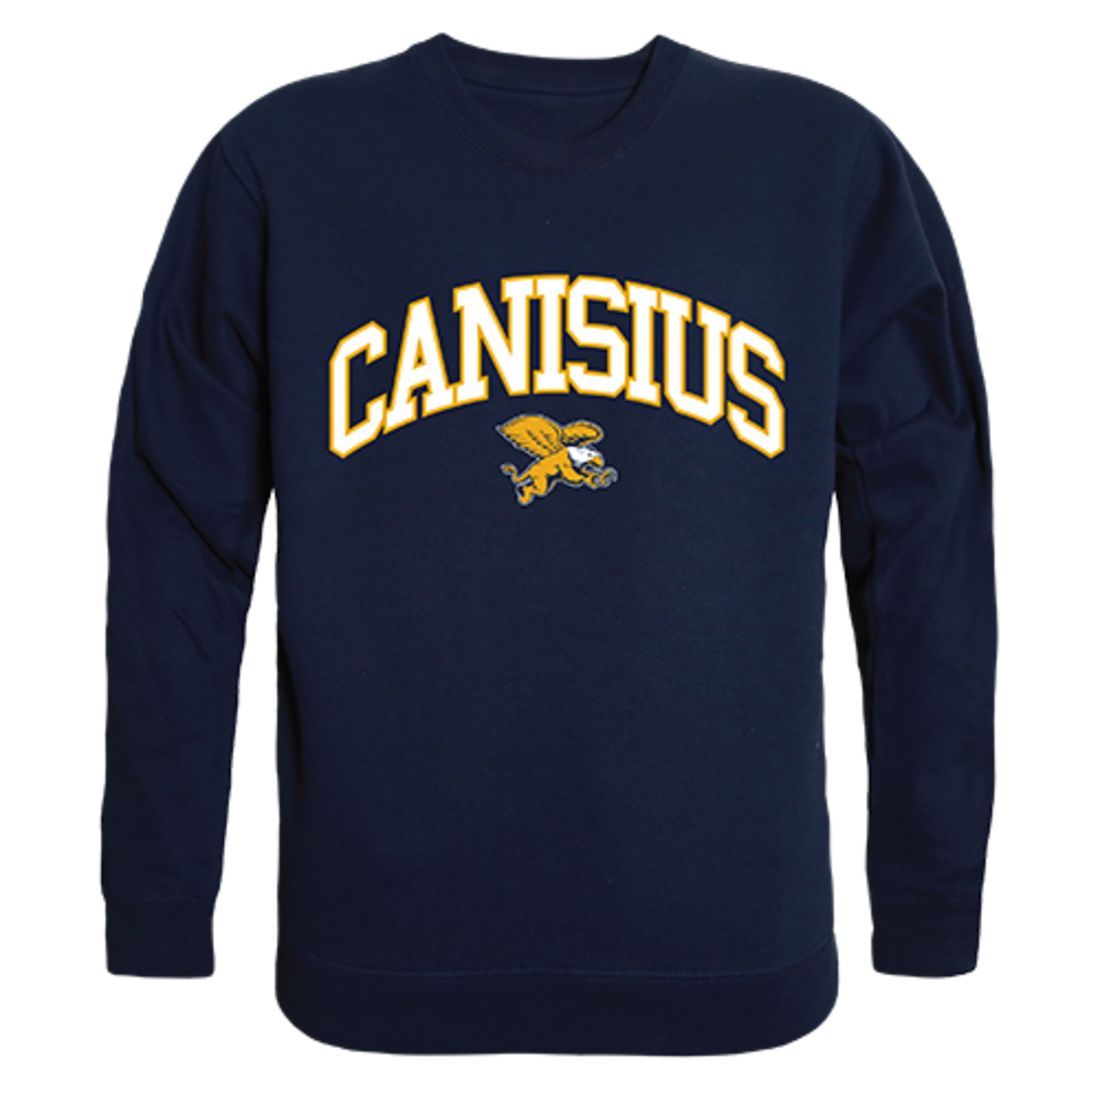 Canisius College Campus Crewneck Pullover Sweatshirt Sweater Navy-Campus-Wardrobe